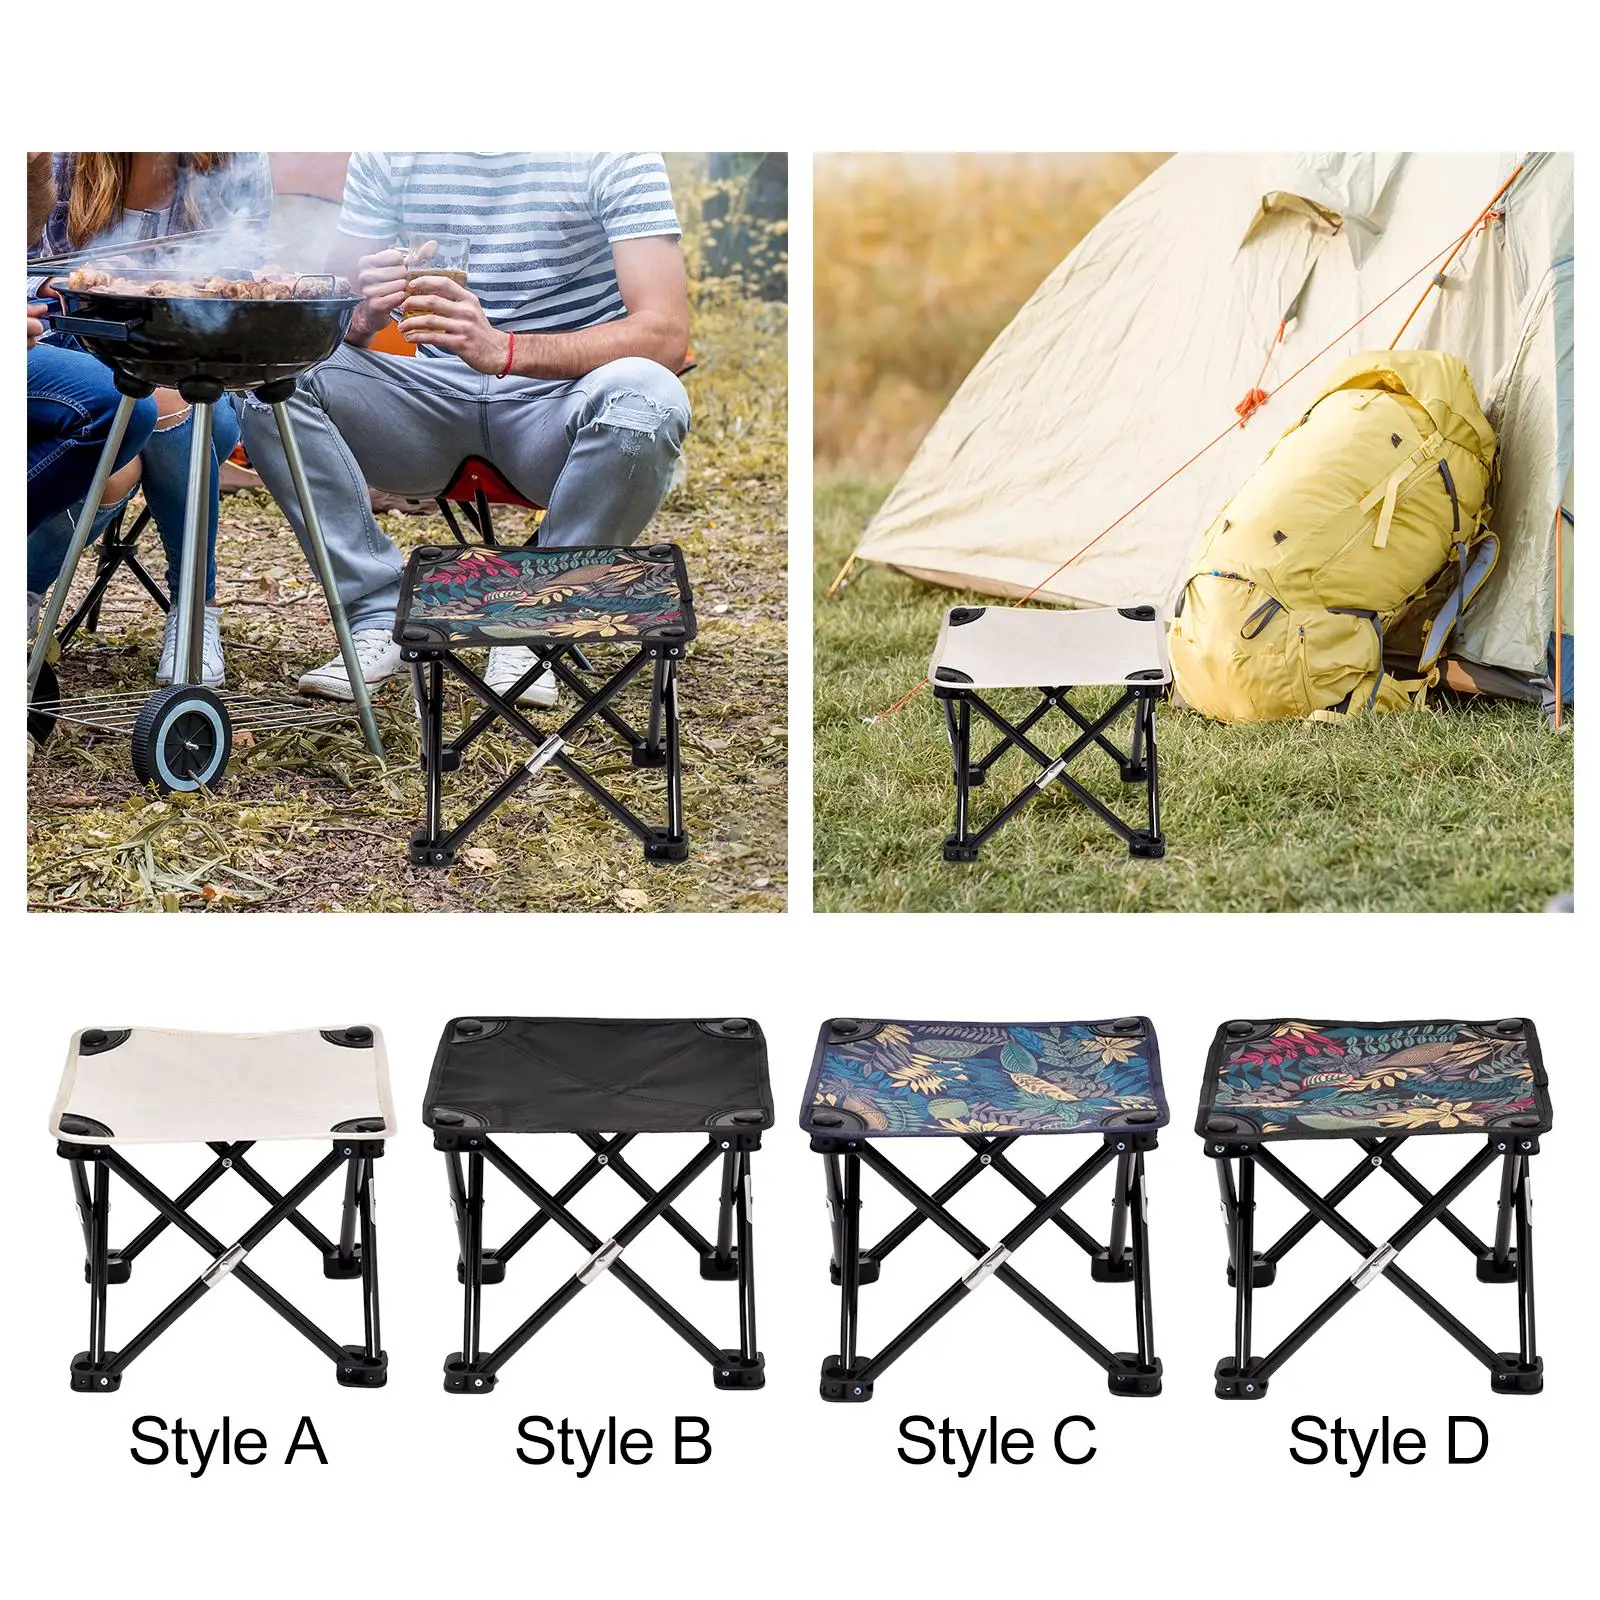 Folding Stools Lightweight Wear Resistant Reusable Aluminum Alloy Camping Chair